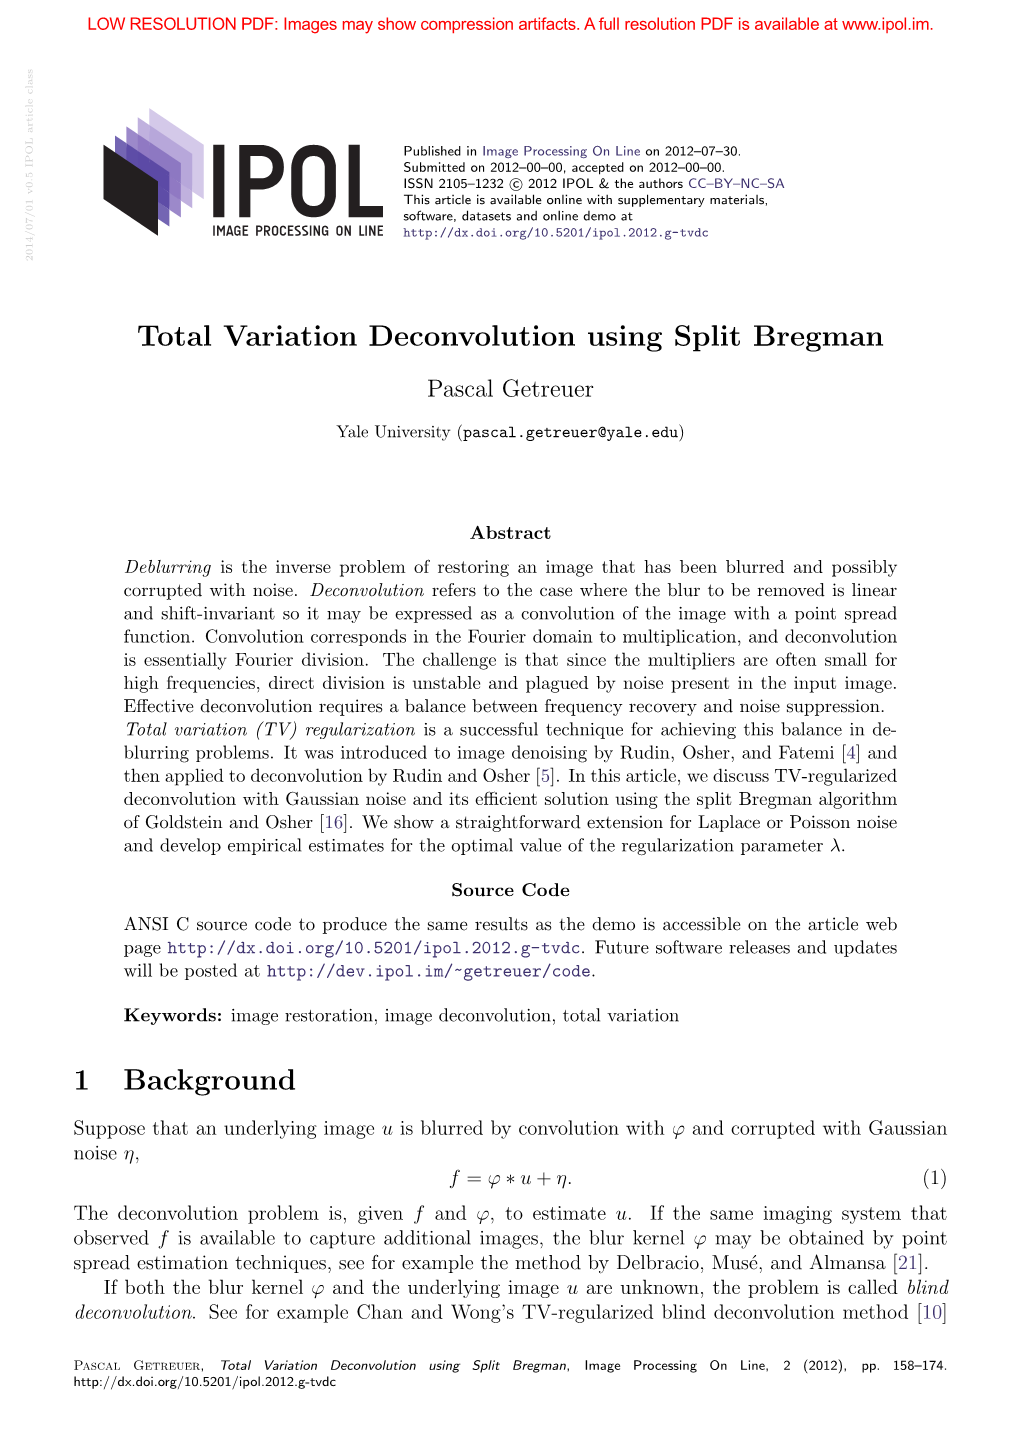 Total Variation Deconvolution Using Split Bregman